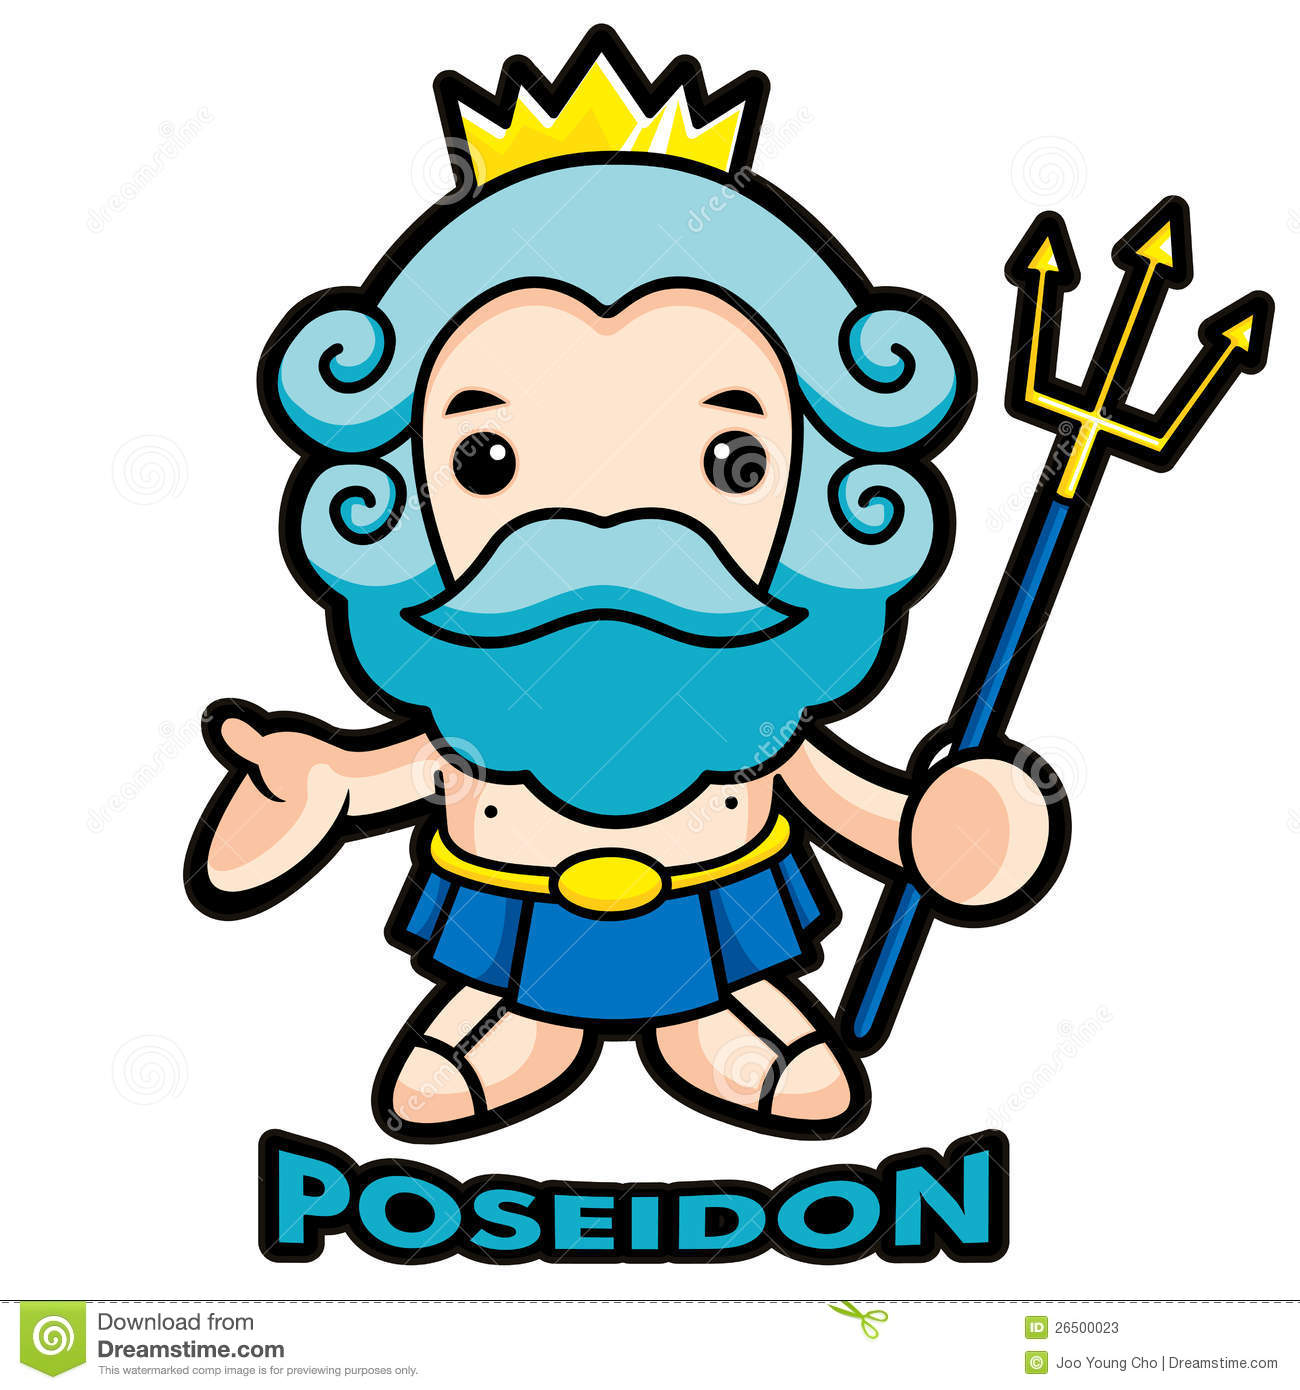 Poseidon clipart #20, Download drawings